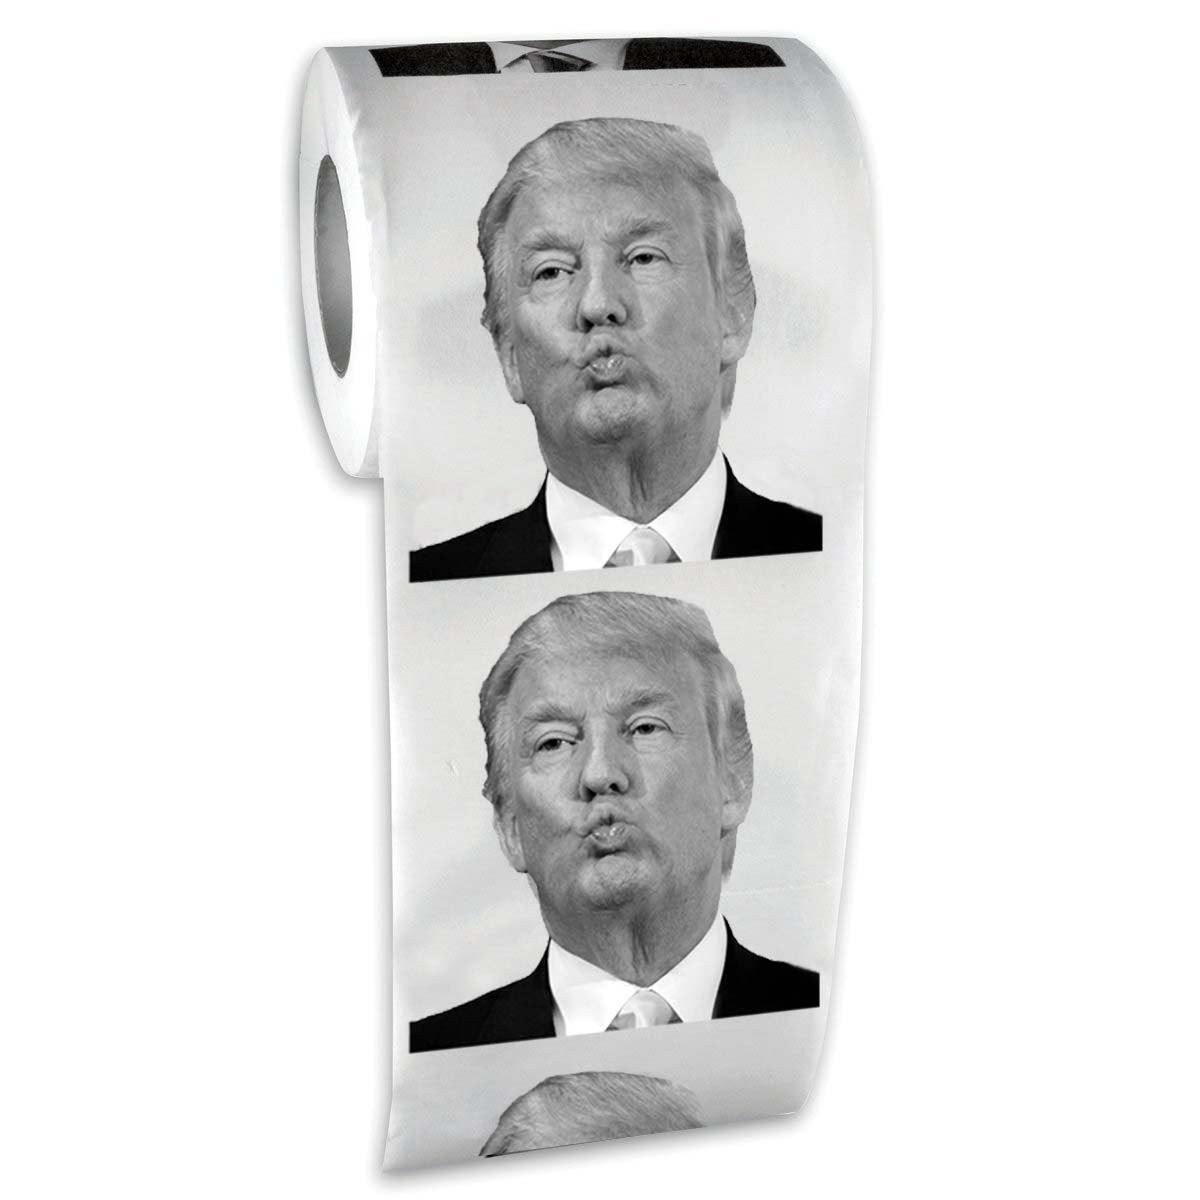 Joe Biden Toilet Paper 